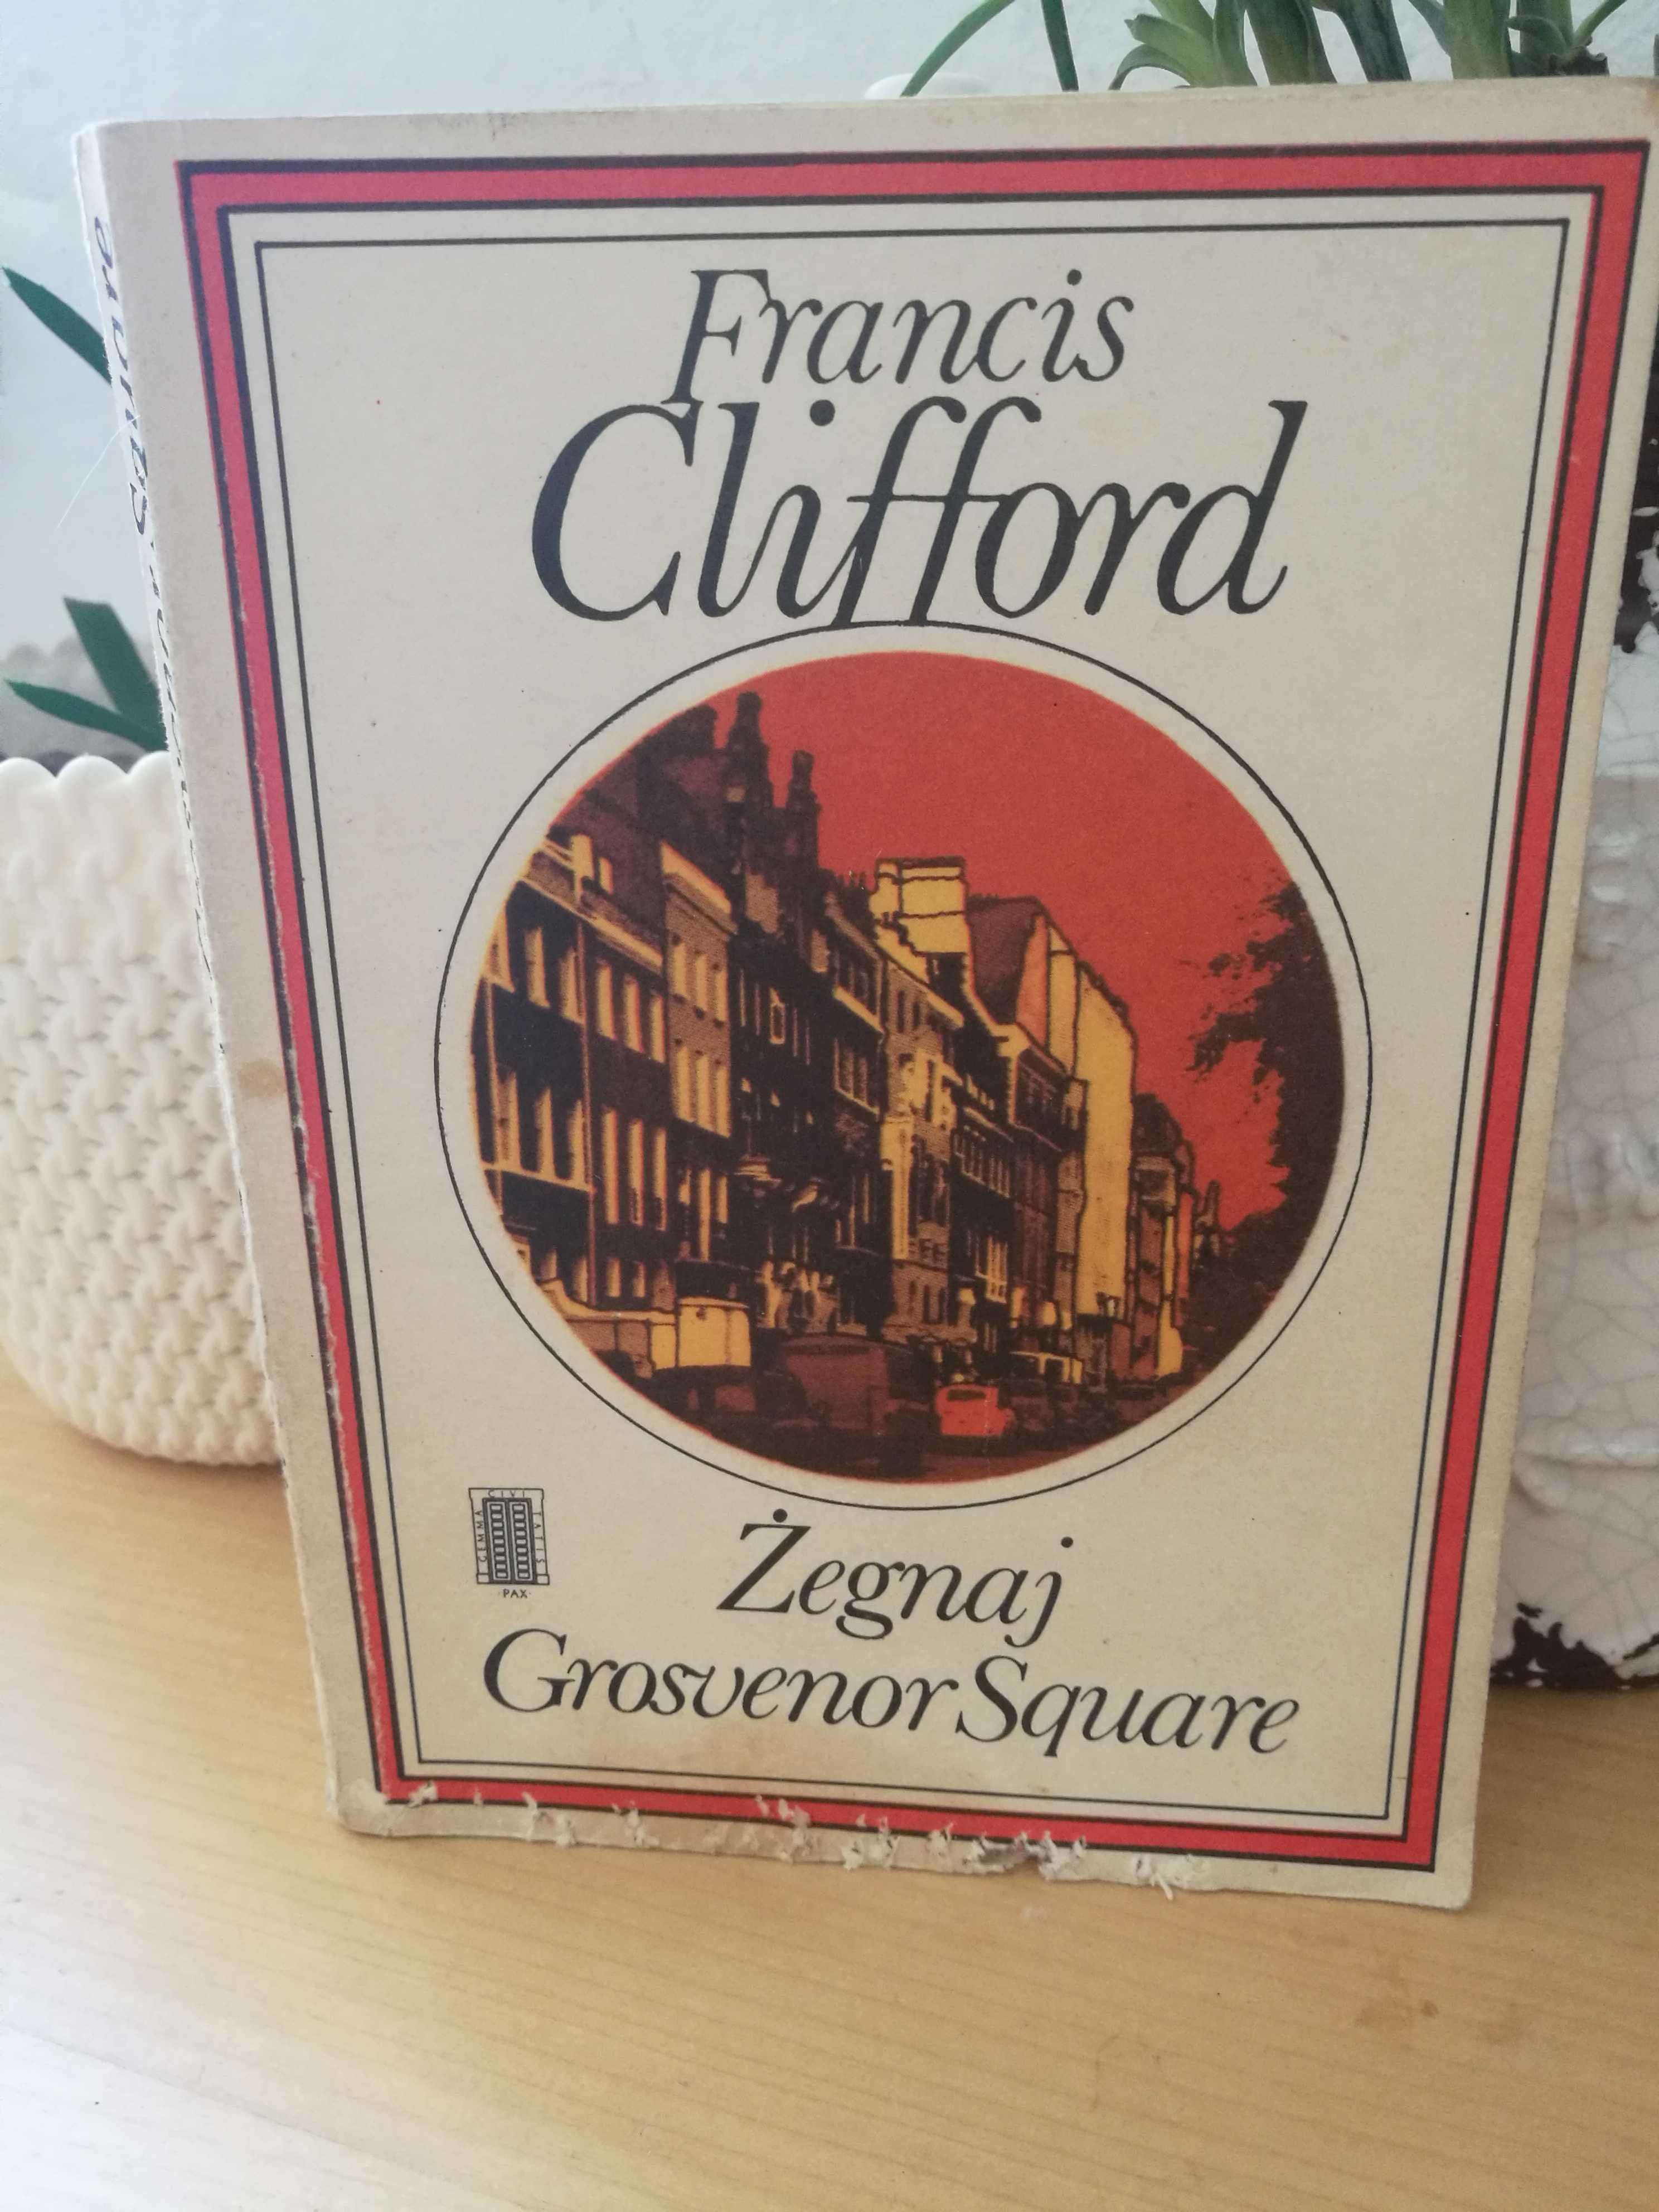 Francis Clifford "Żegnaj Grosvenor Square"